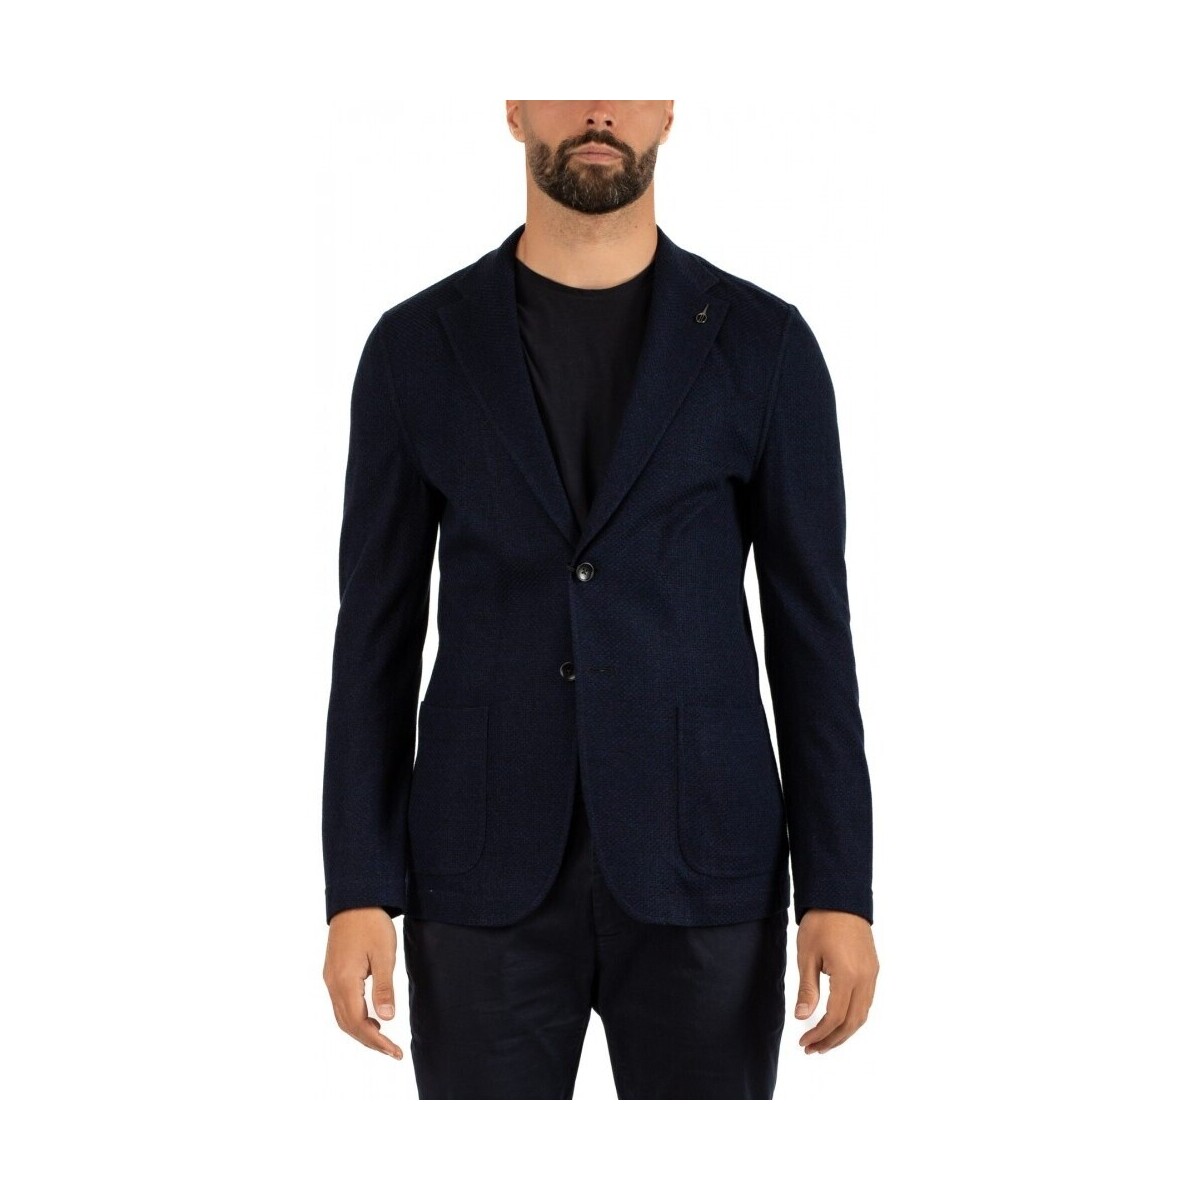 Vêtements Homme Vestes / Blazers Paoloni BLAZER HOMME Bleu